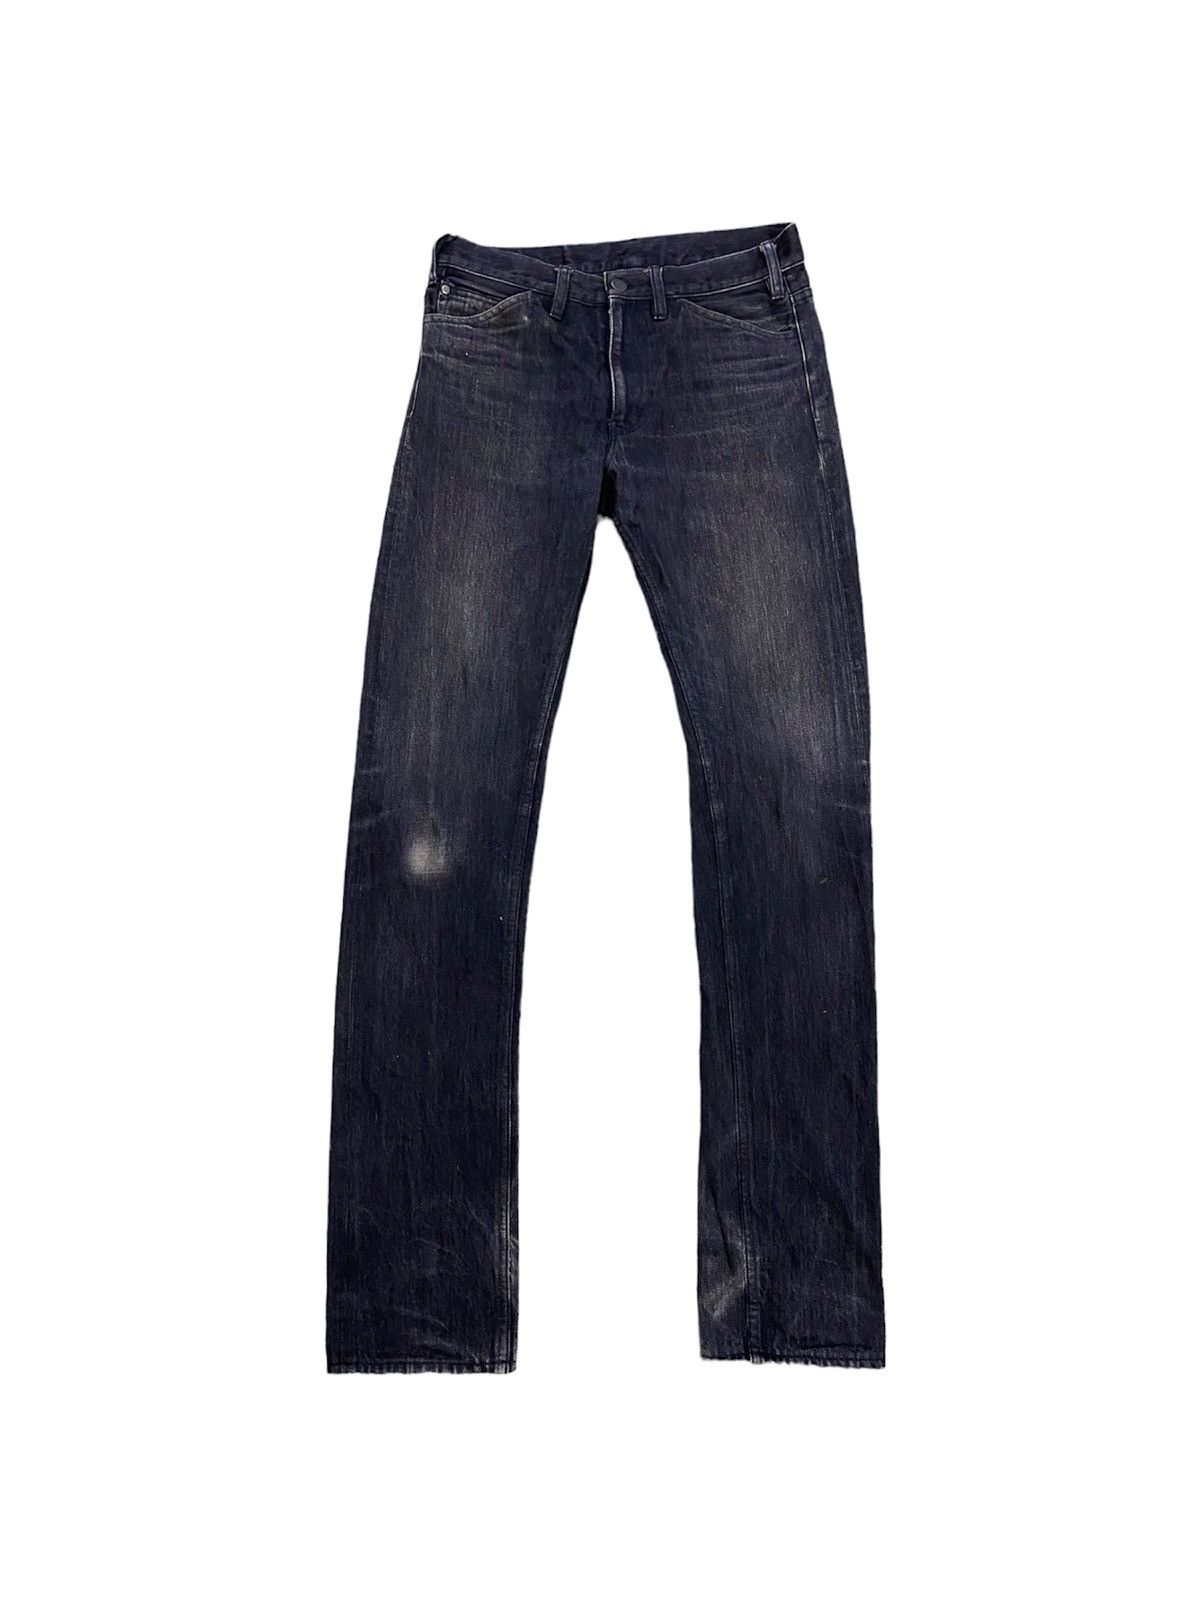 Lemaire Black Leather Lining Pocket Jeans - 1